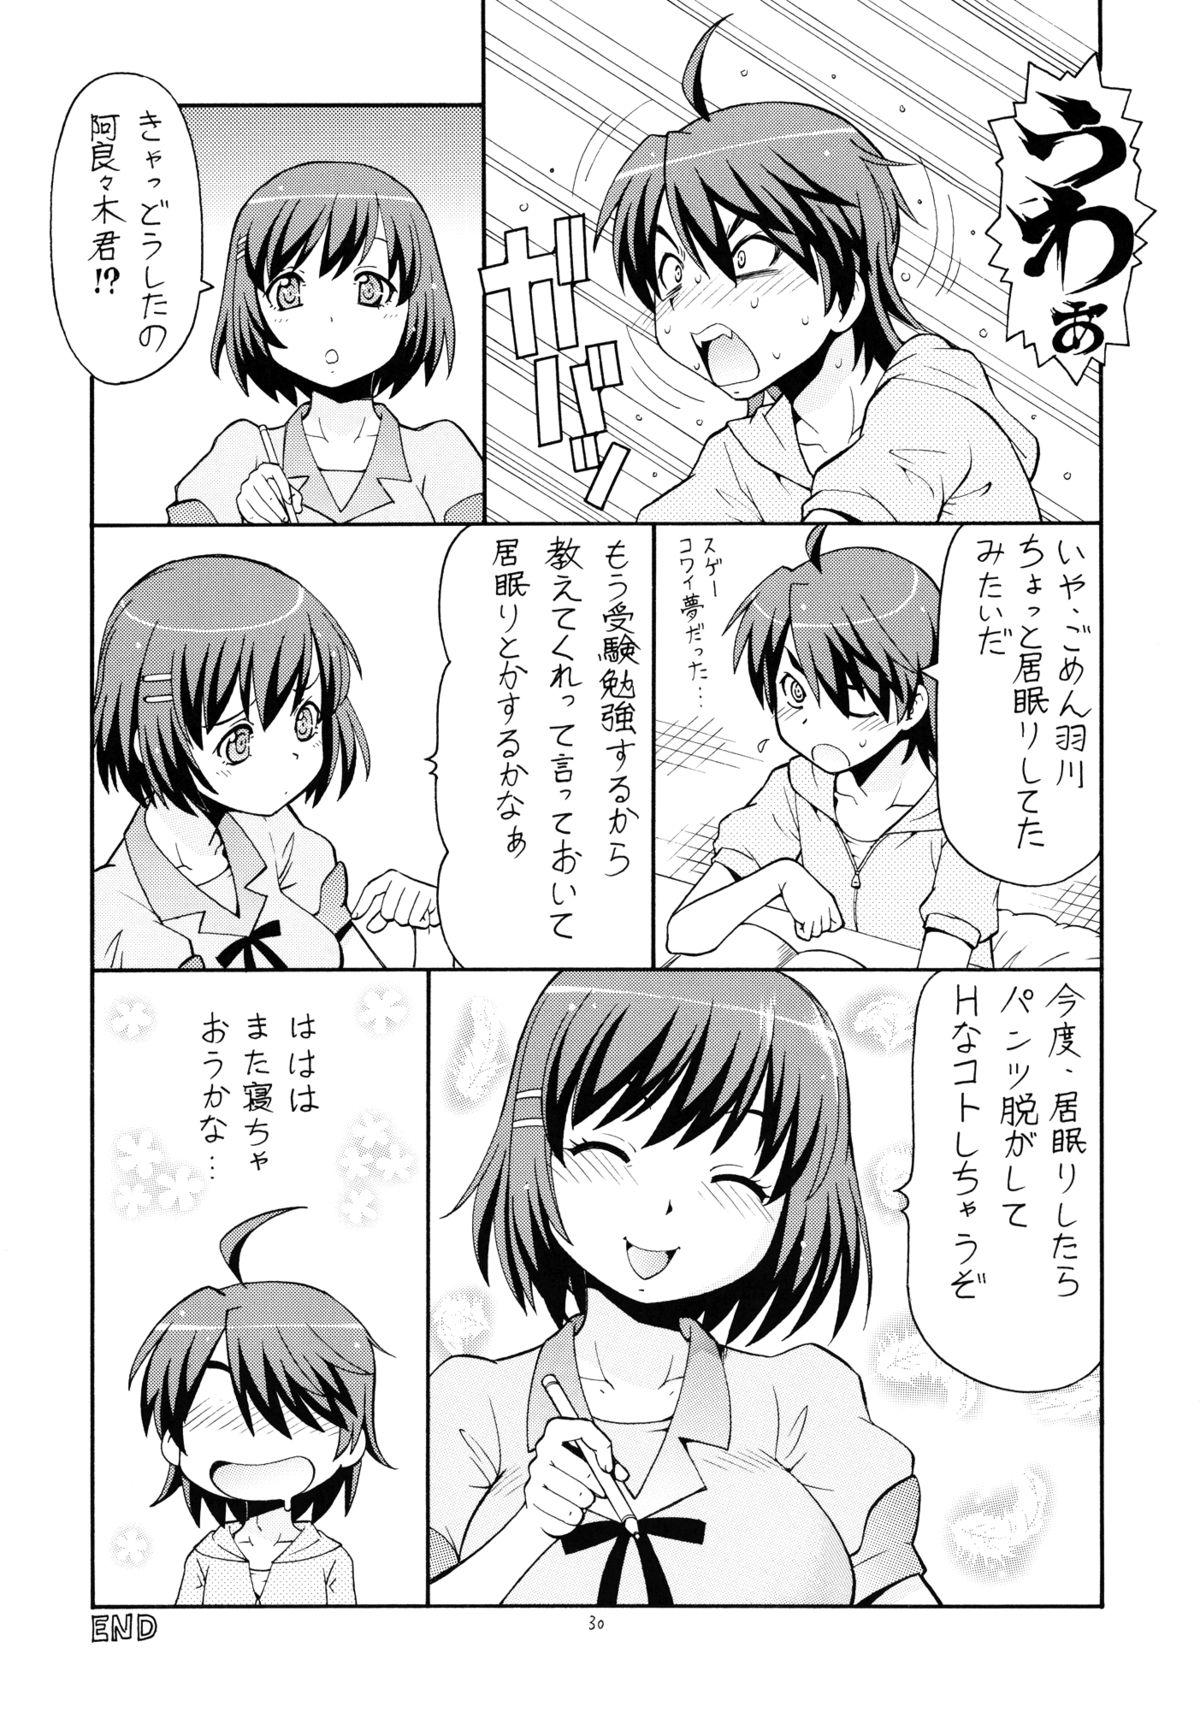 Van Hito ni Hakanai to Kaite "Araragi" to Yomu 5&6 - Bakemonogatari The - Page 31